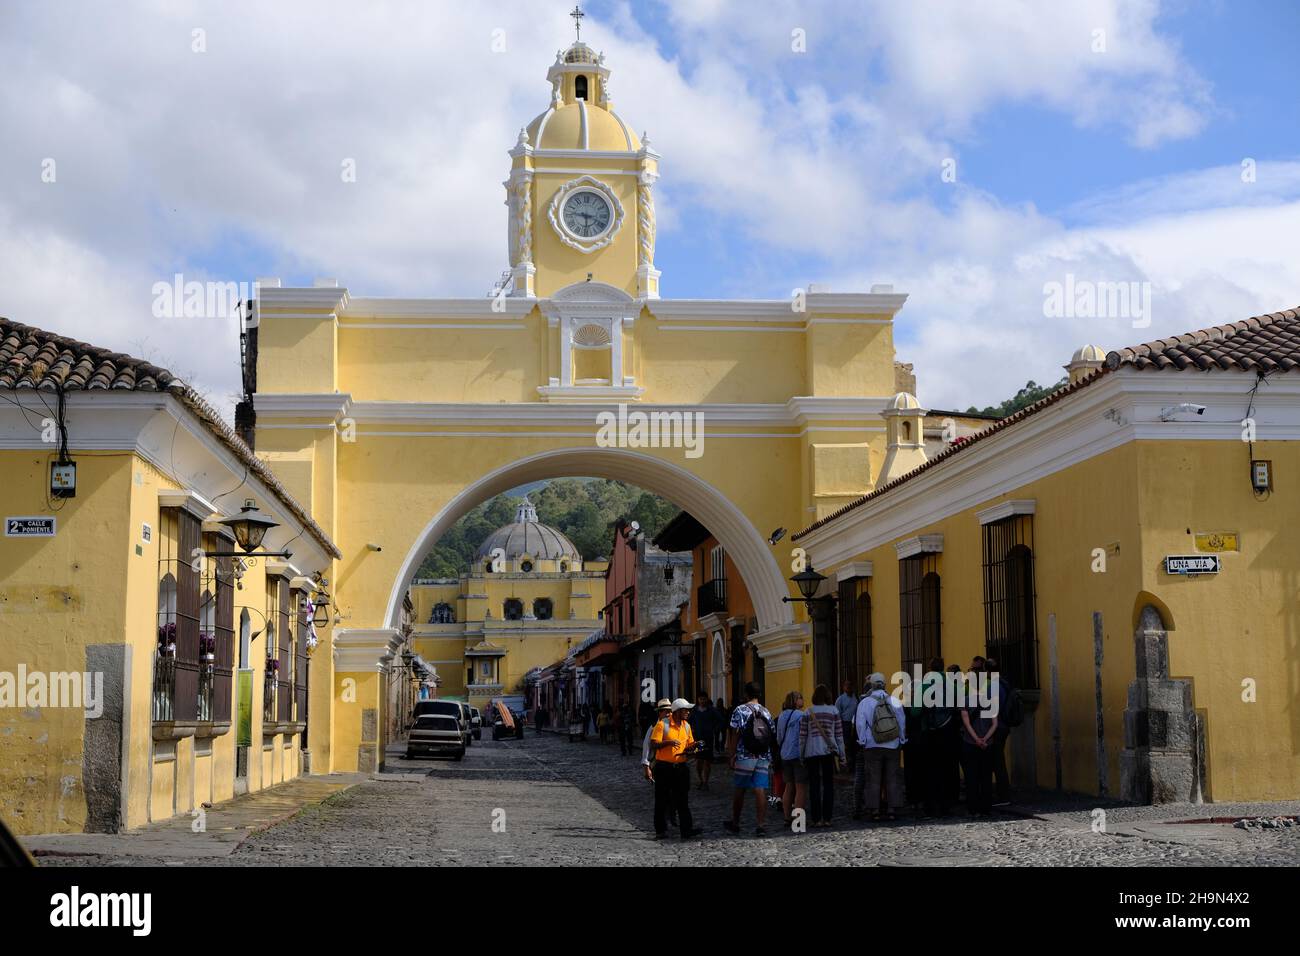 Guatemala Antigua Guatemala - Santa Catalina Arch - El Arco de Santa Catalina Stock Photo